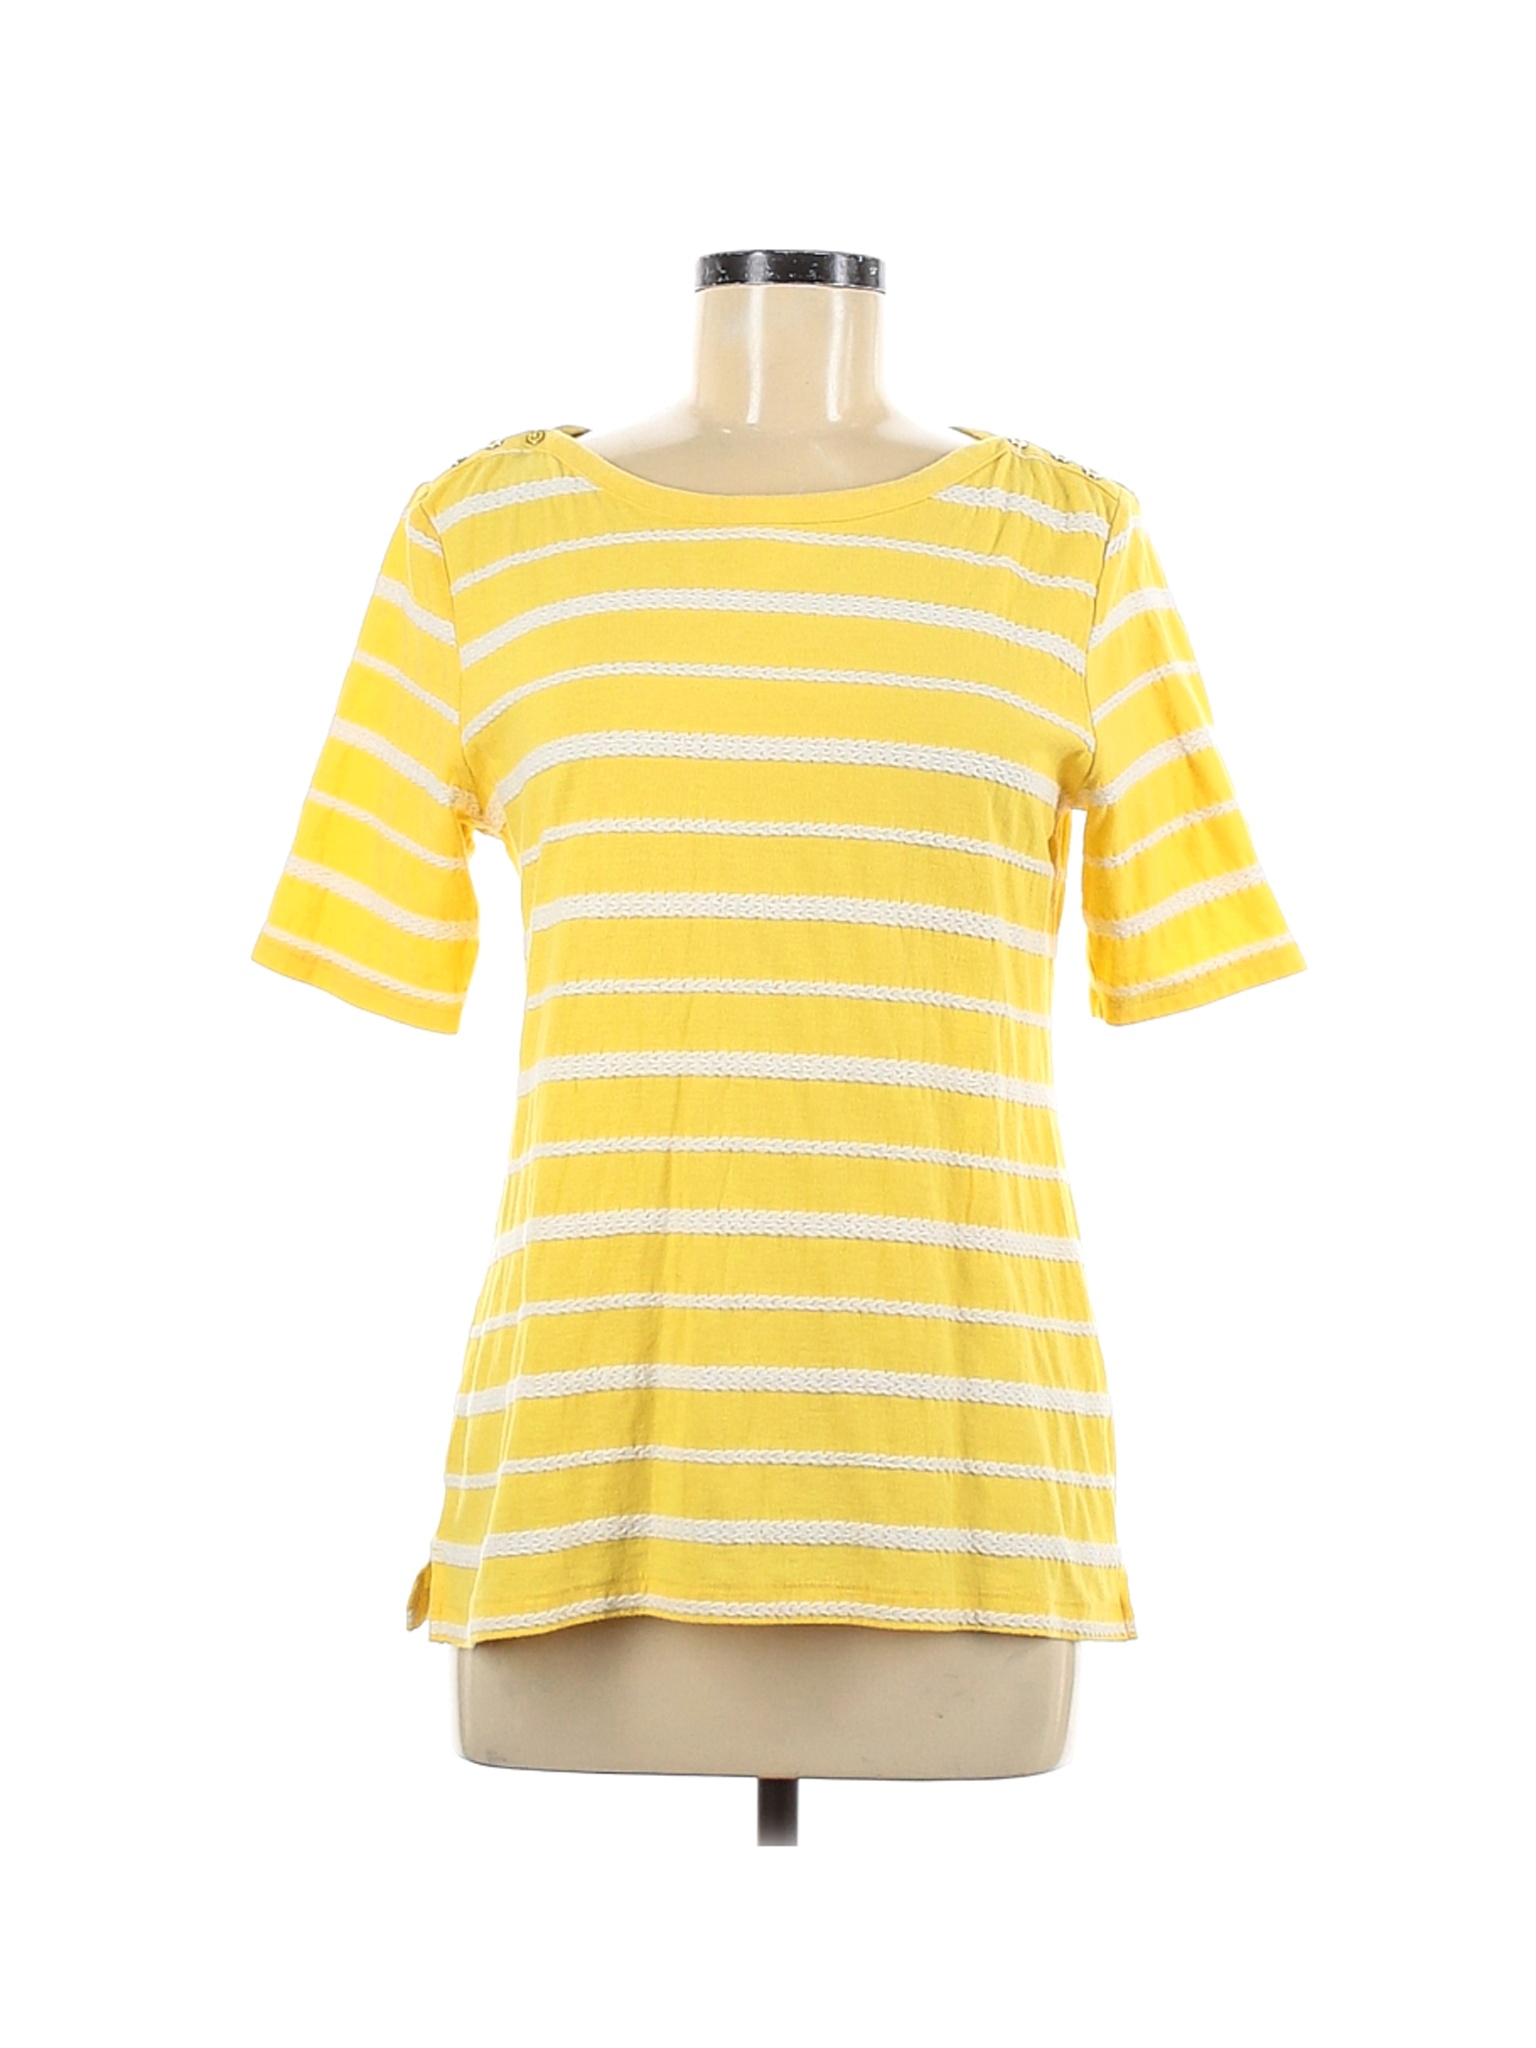 Croft & Barrow Women Yellow Short Sleeve Top M | eBay